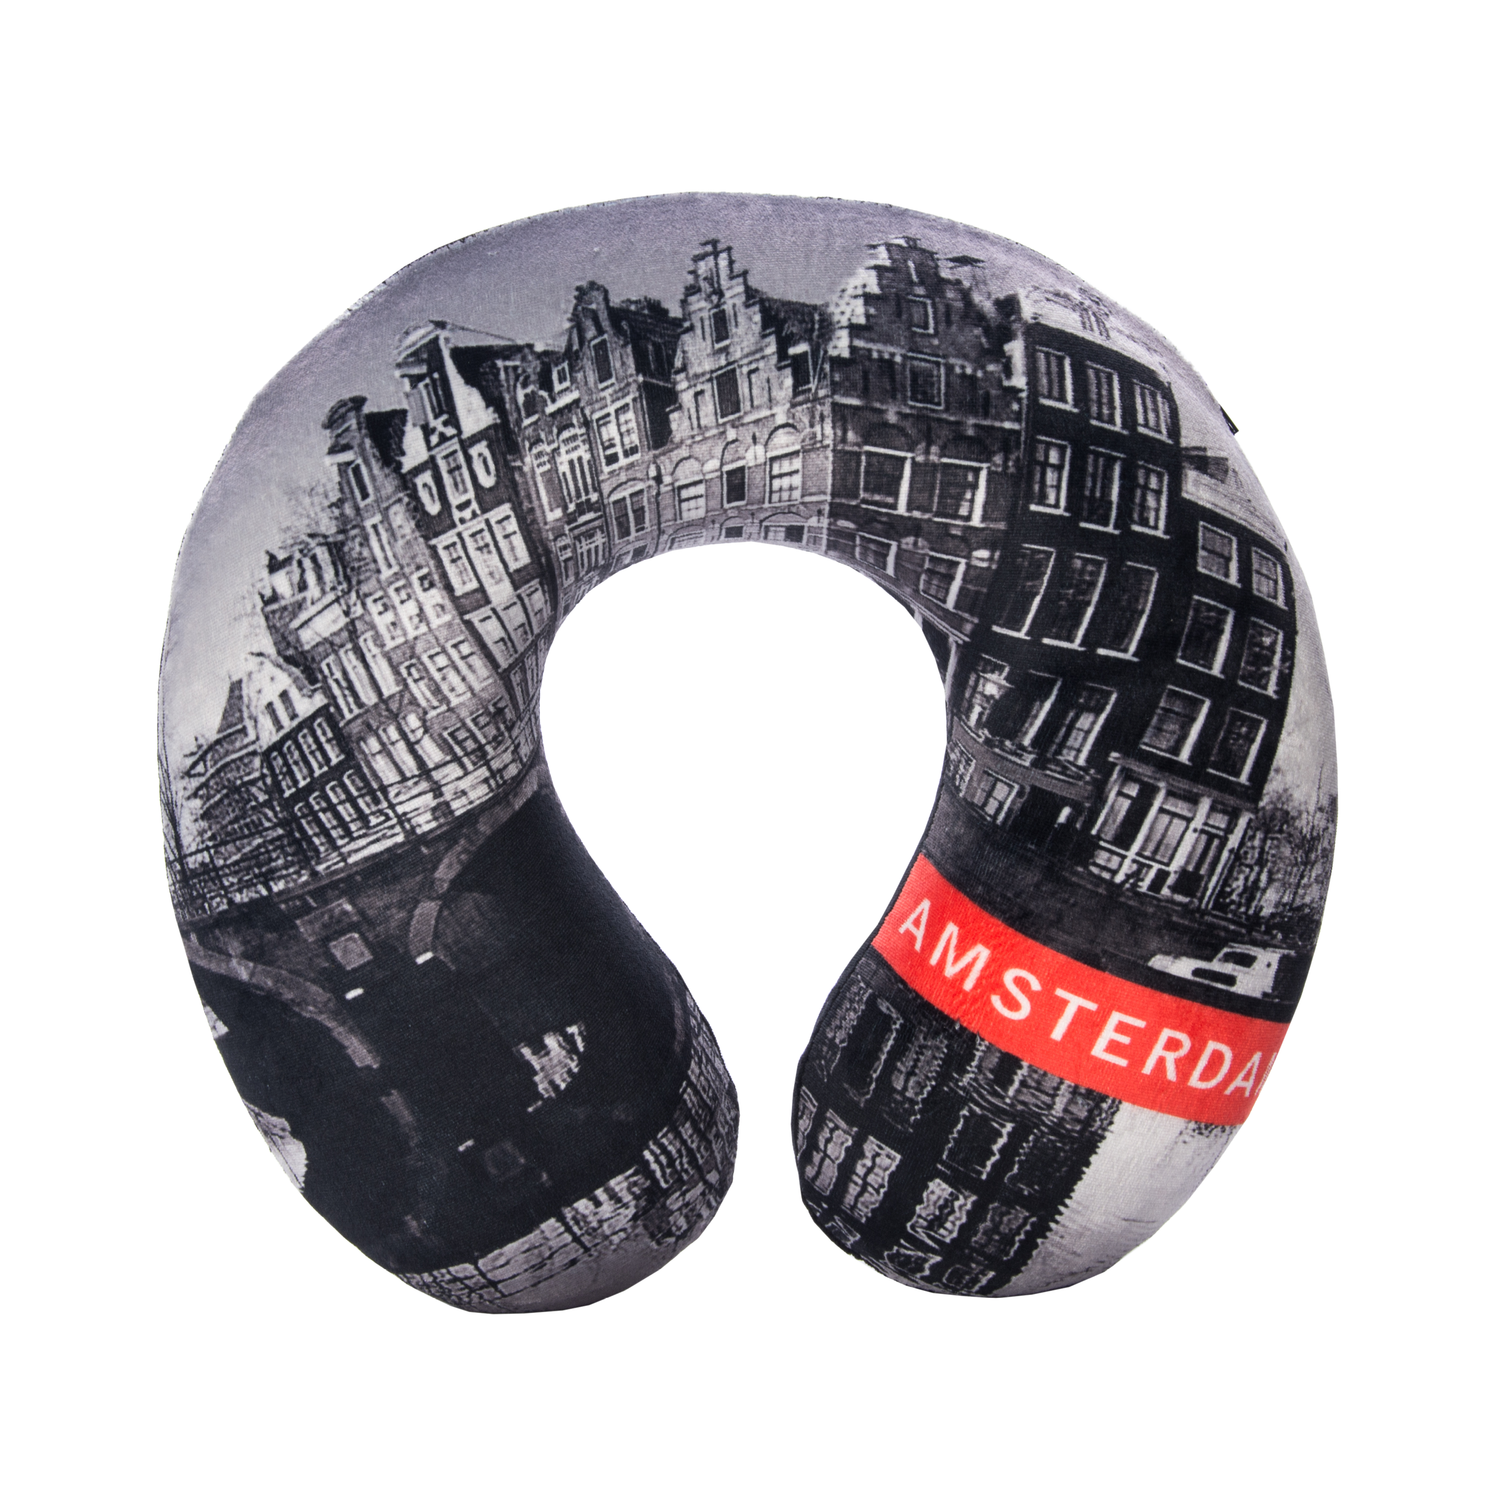 Oscar - Neck pillow - Amsterdam houses